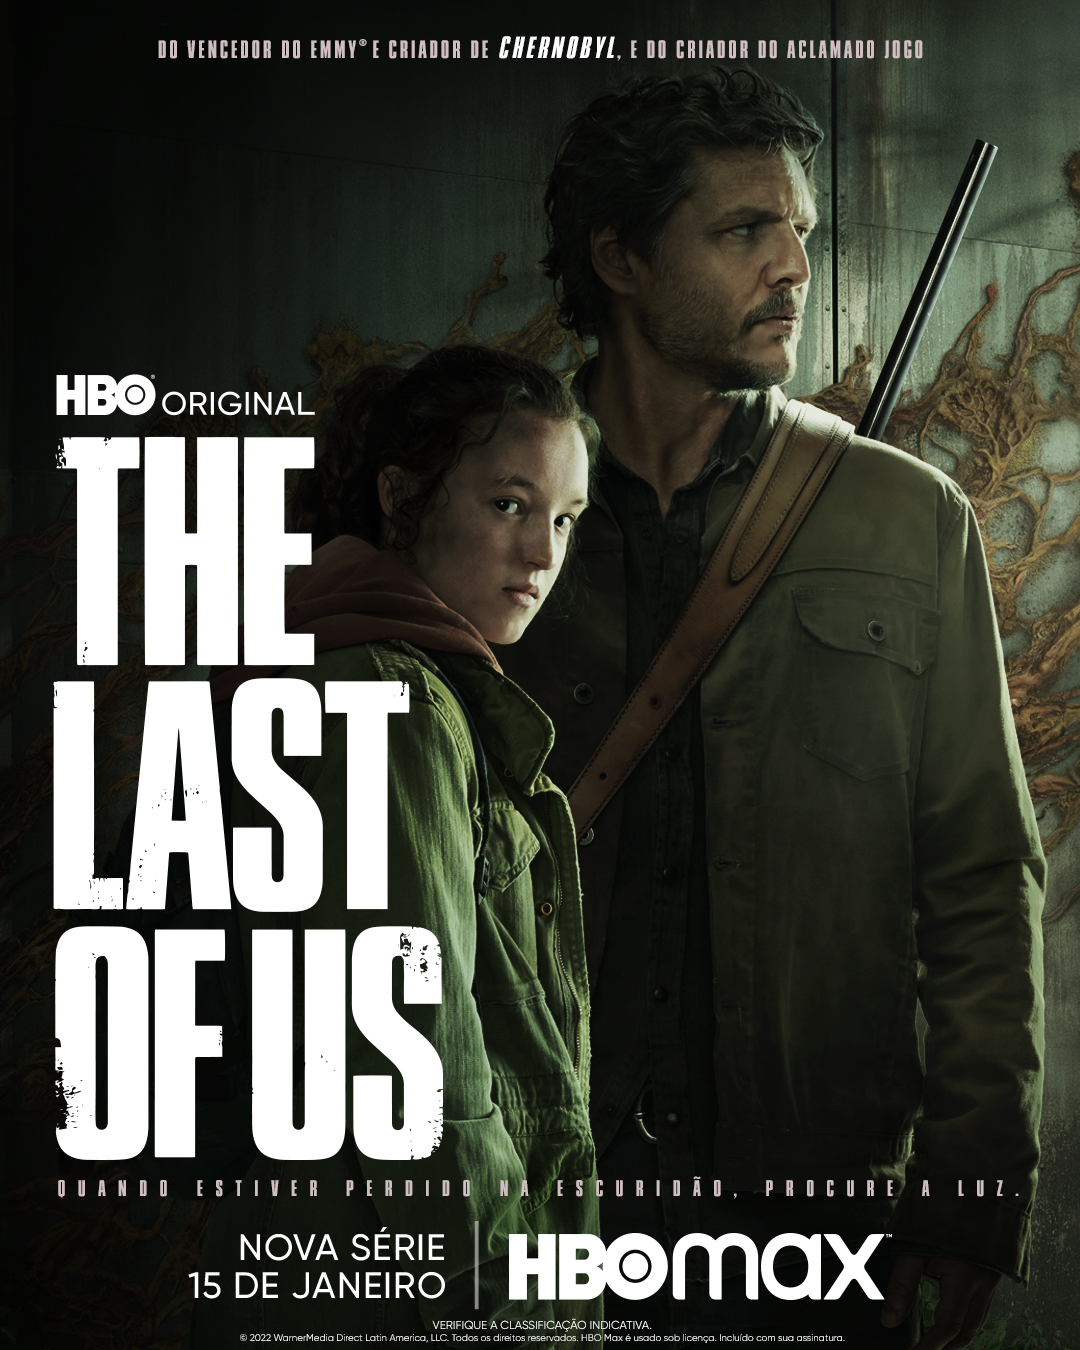 Onde assistir a série The Last of Us?